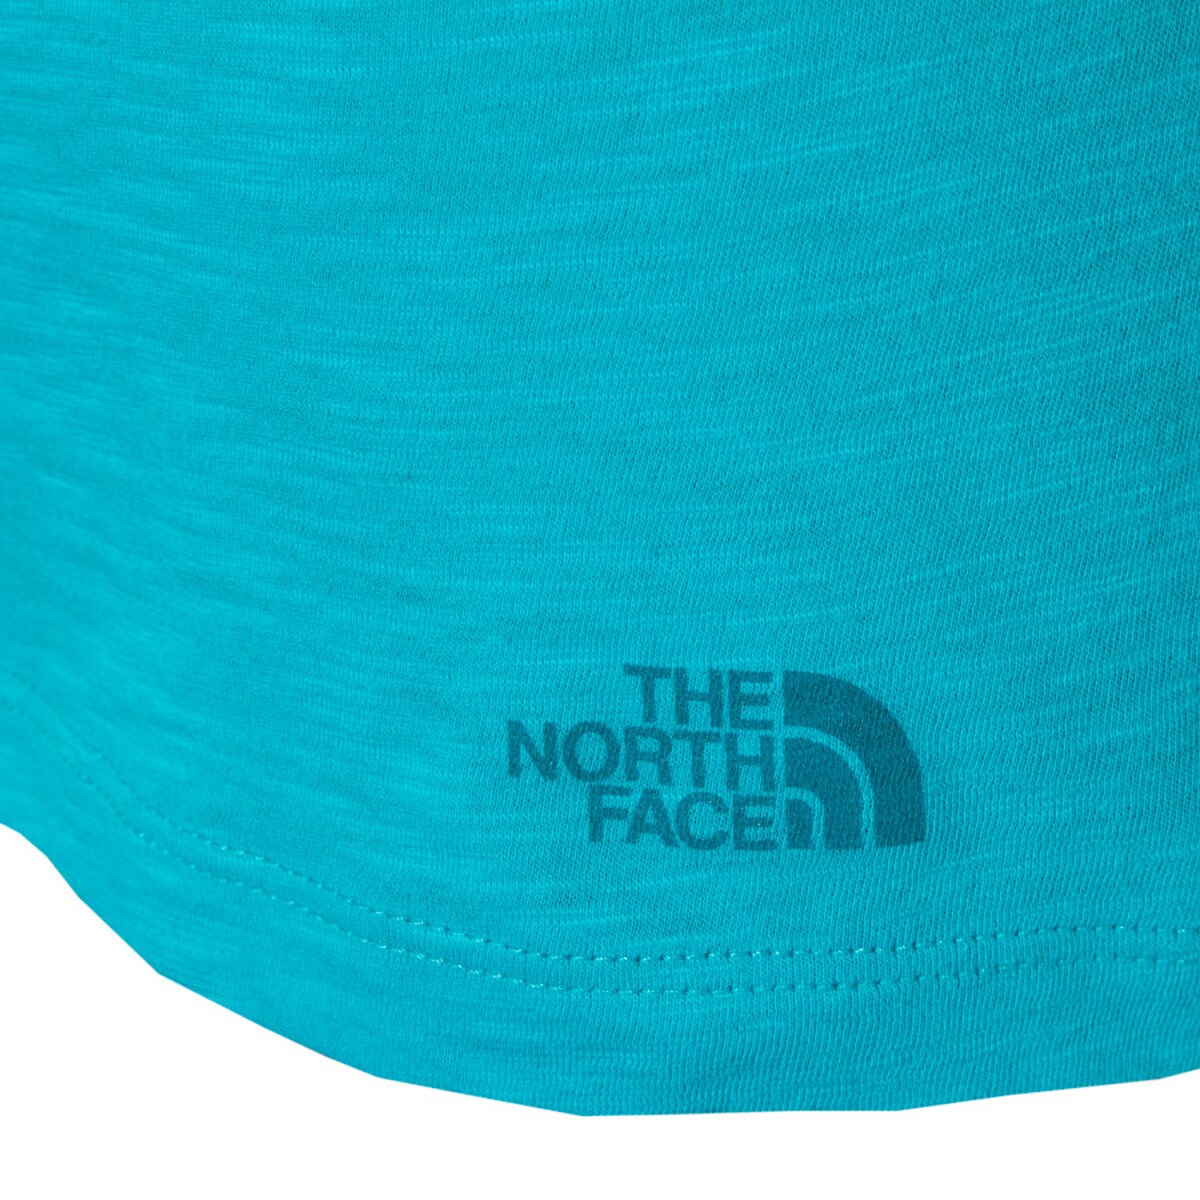 The North Face Tadasana Slub Top - Short-Sleeve - Women's - Clothing